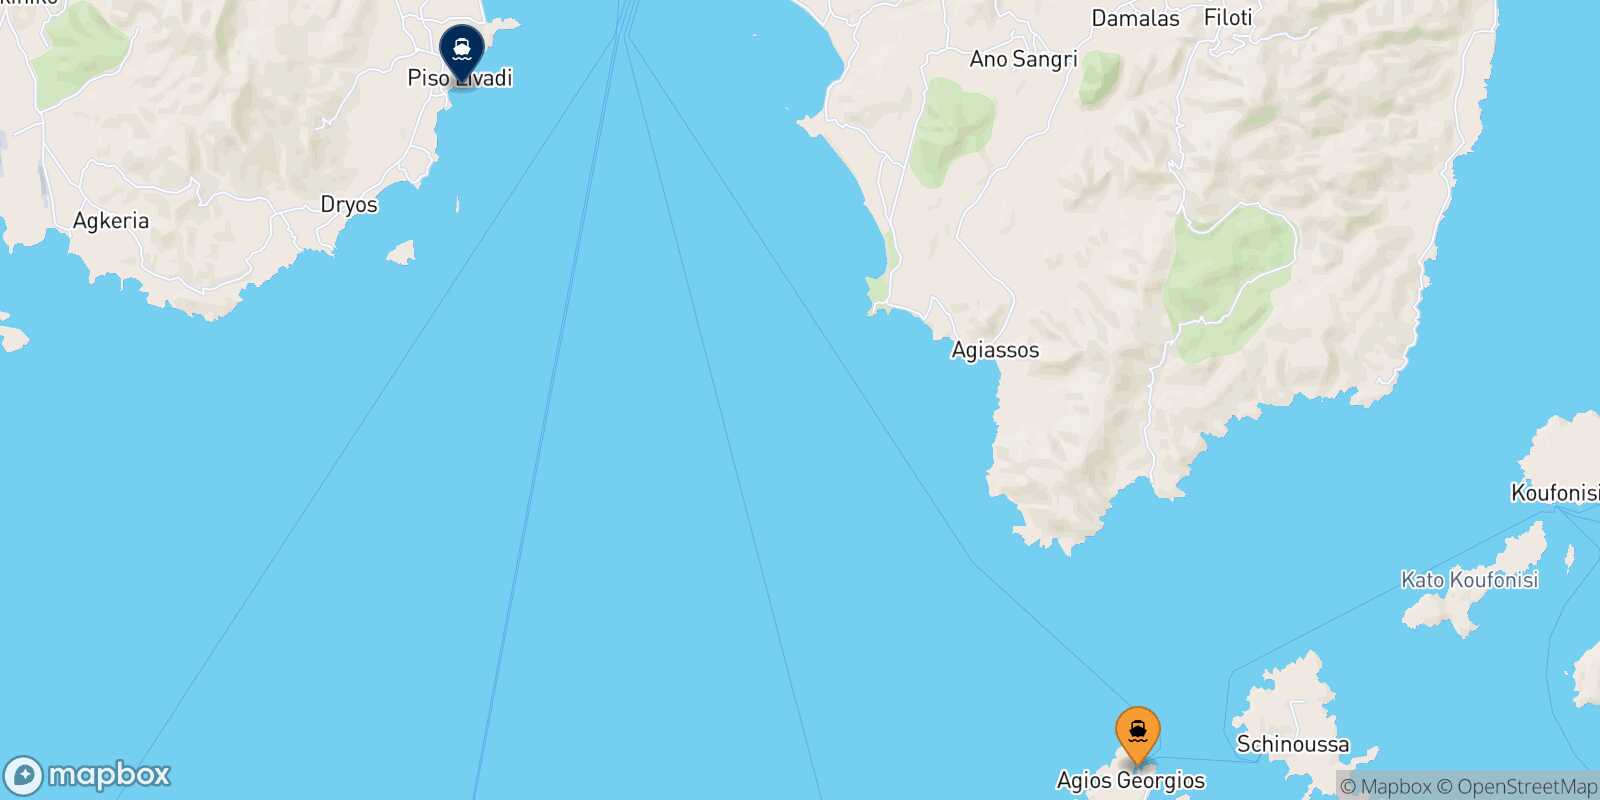 Iraklia Piso Livadi (Paros) route map